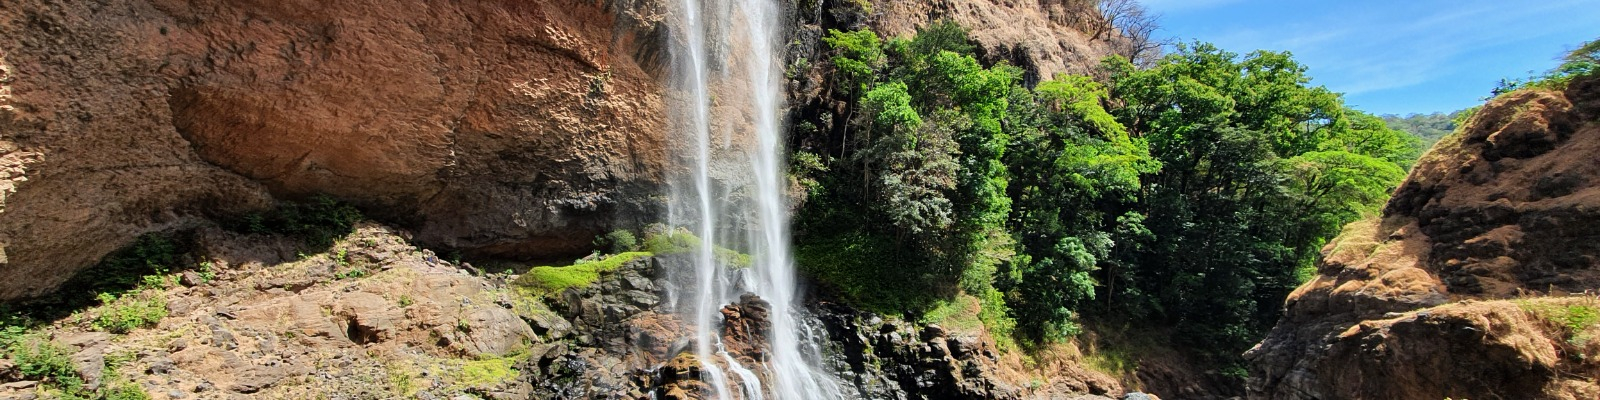 kiki waterfall hidden paradise from